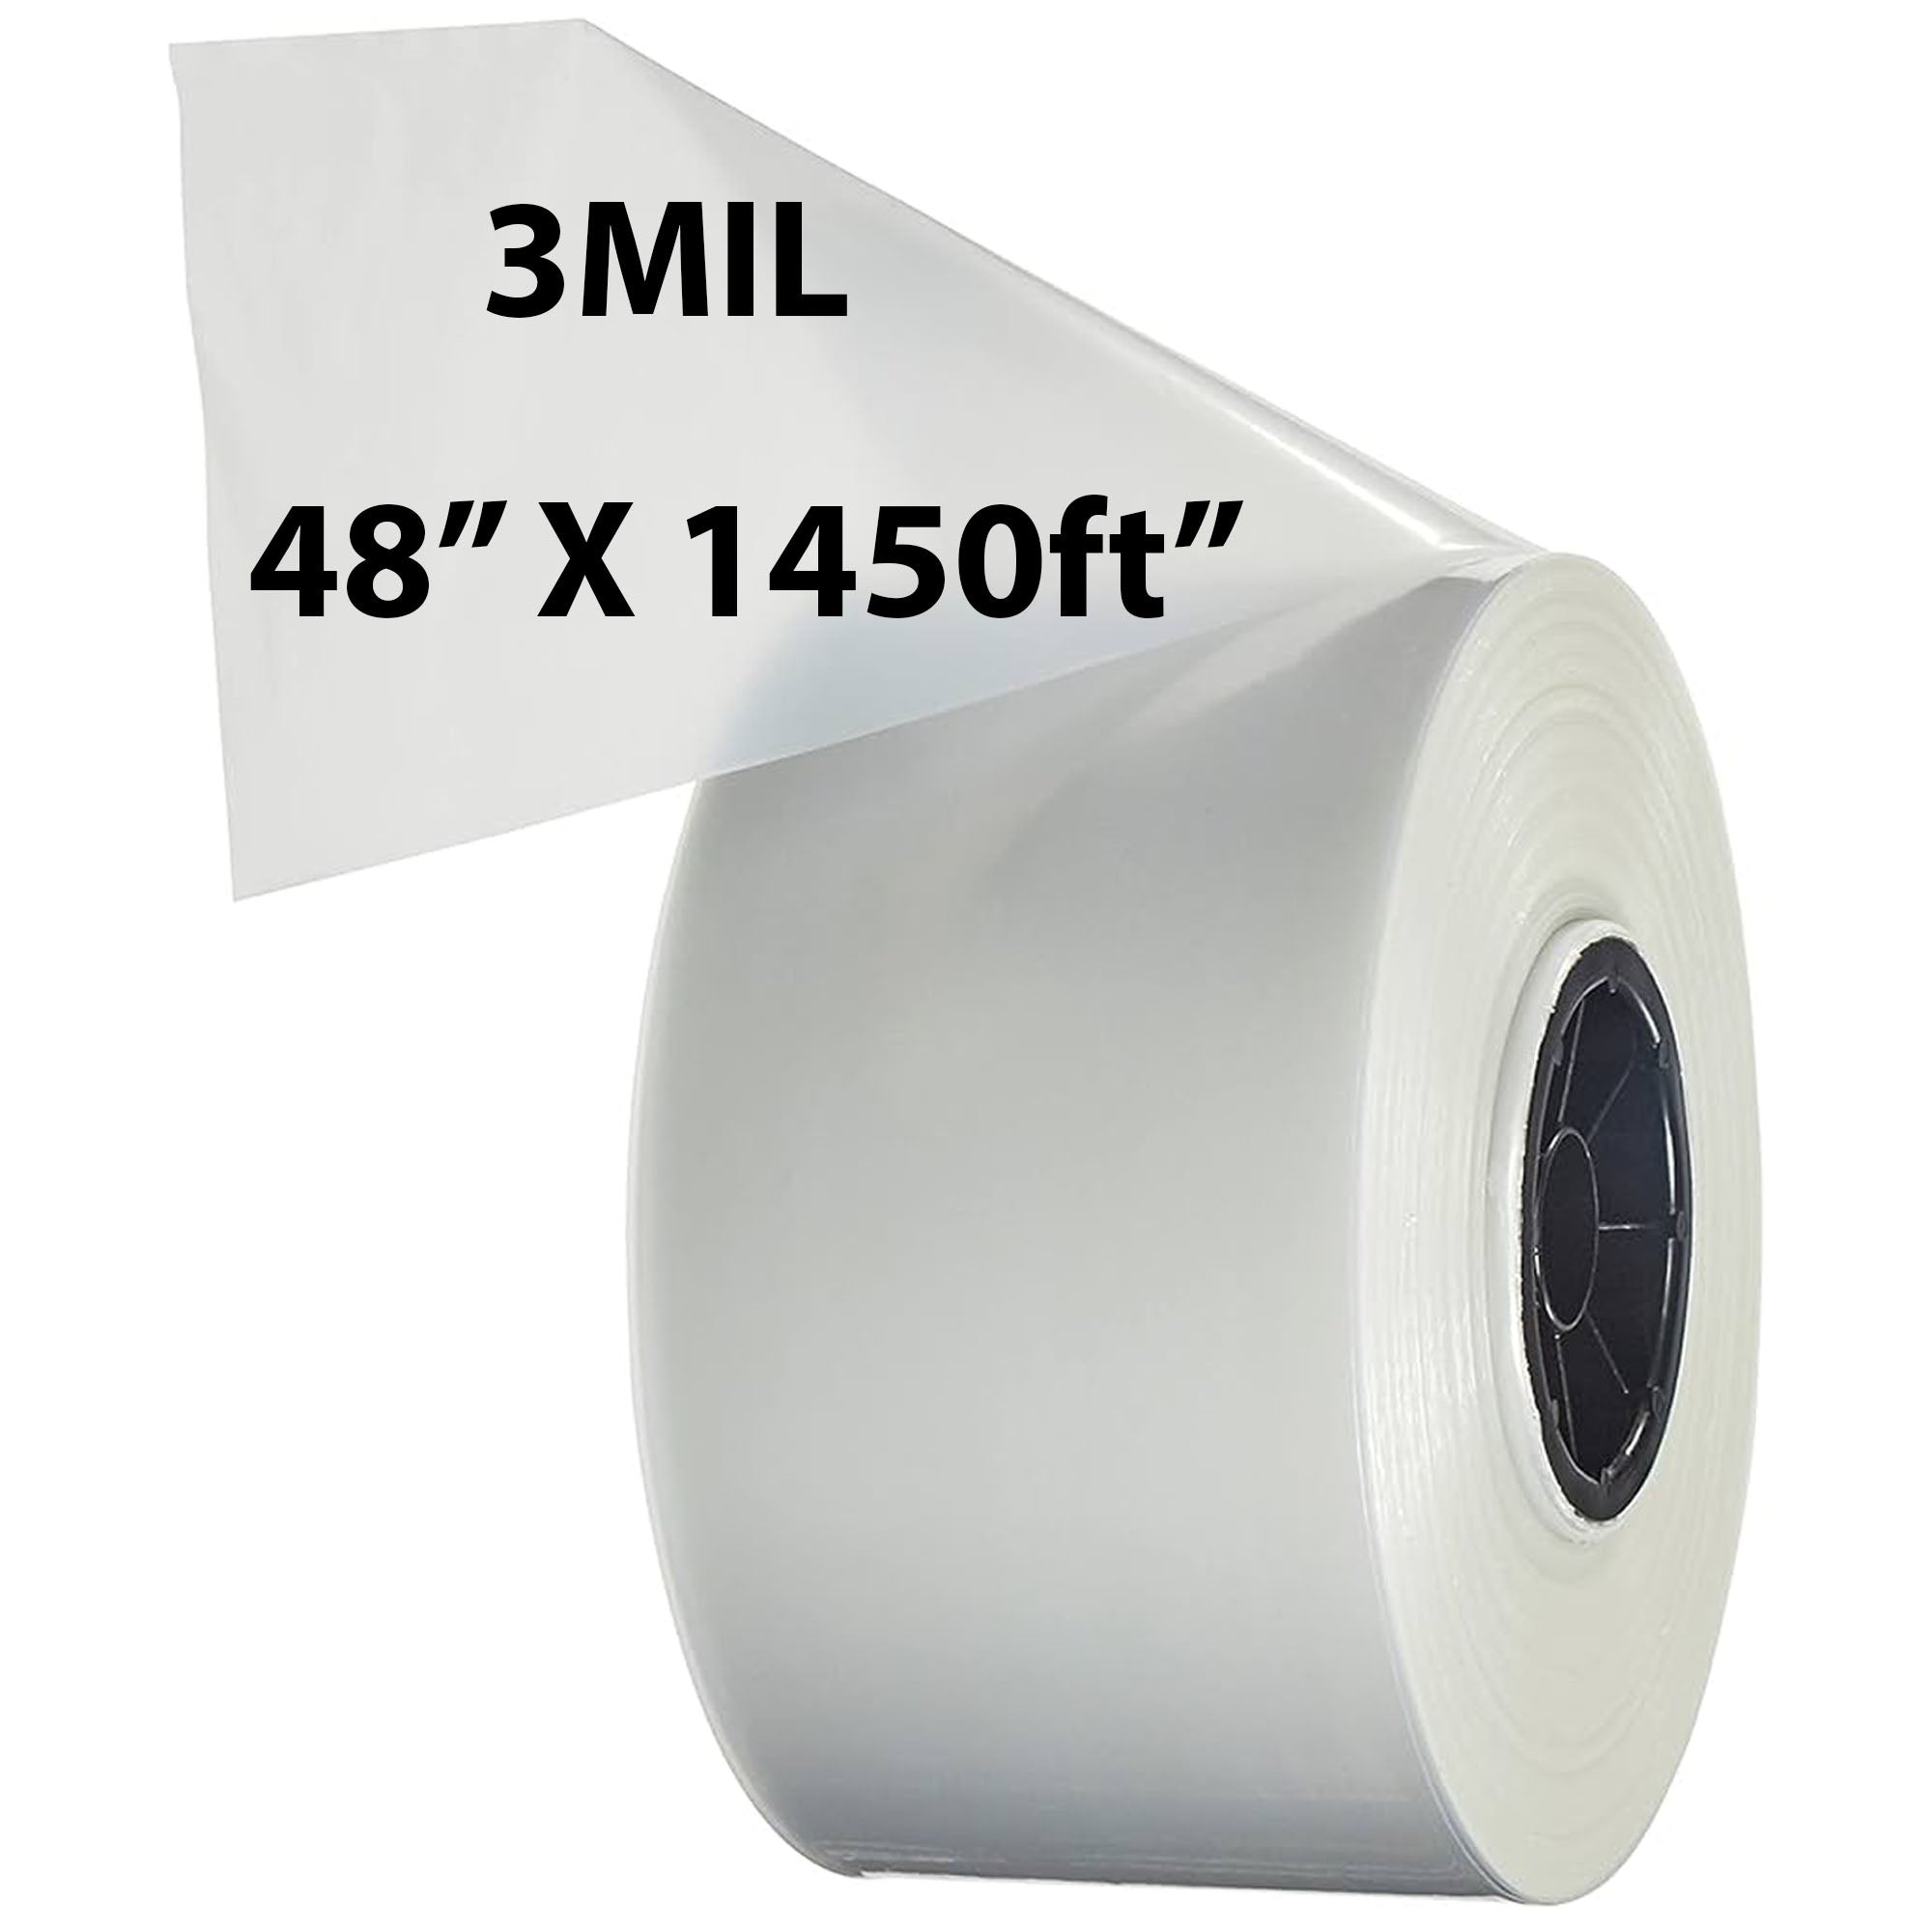 Food Grade Poly Tubing Roll Bags 3Mil 48x1450ft- Impulse Heat Sealer